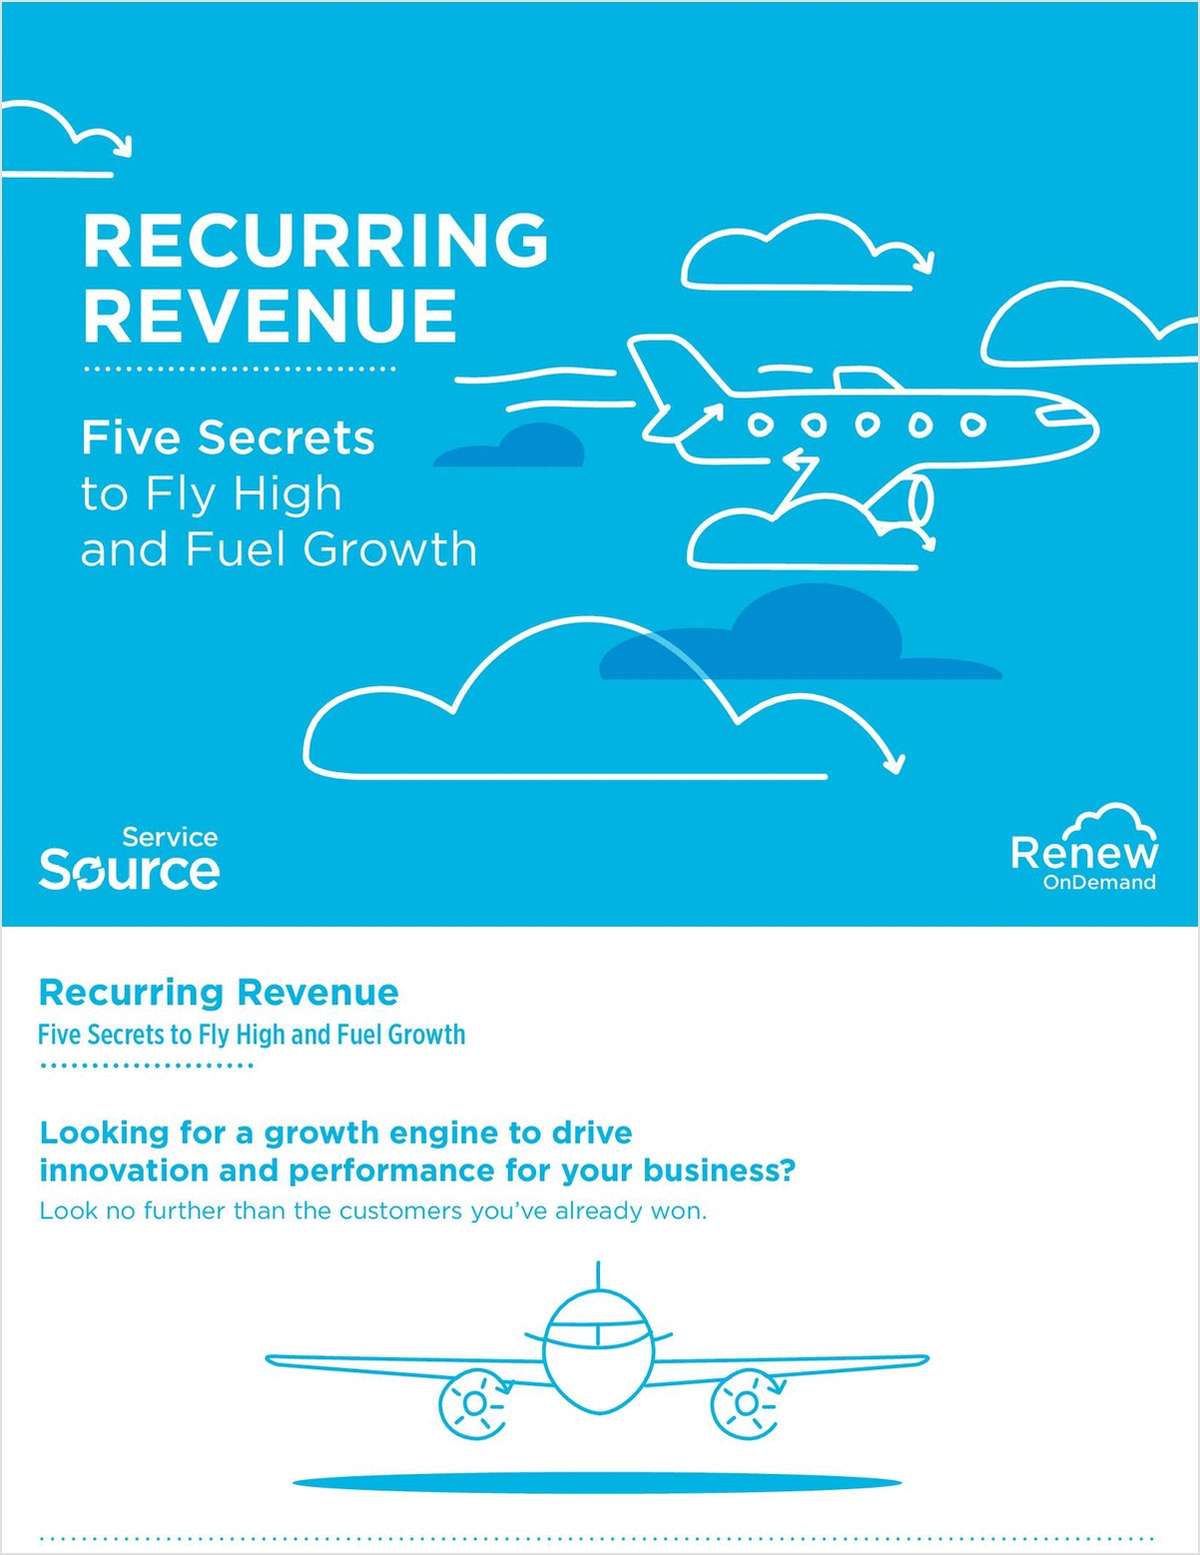 5 Recurring Revenue Growth Secrets